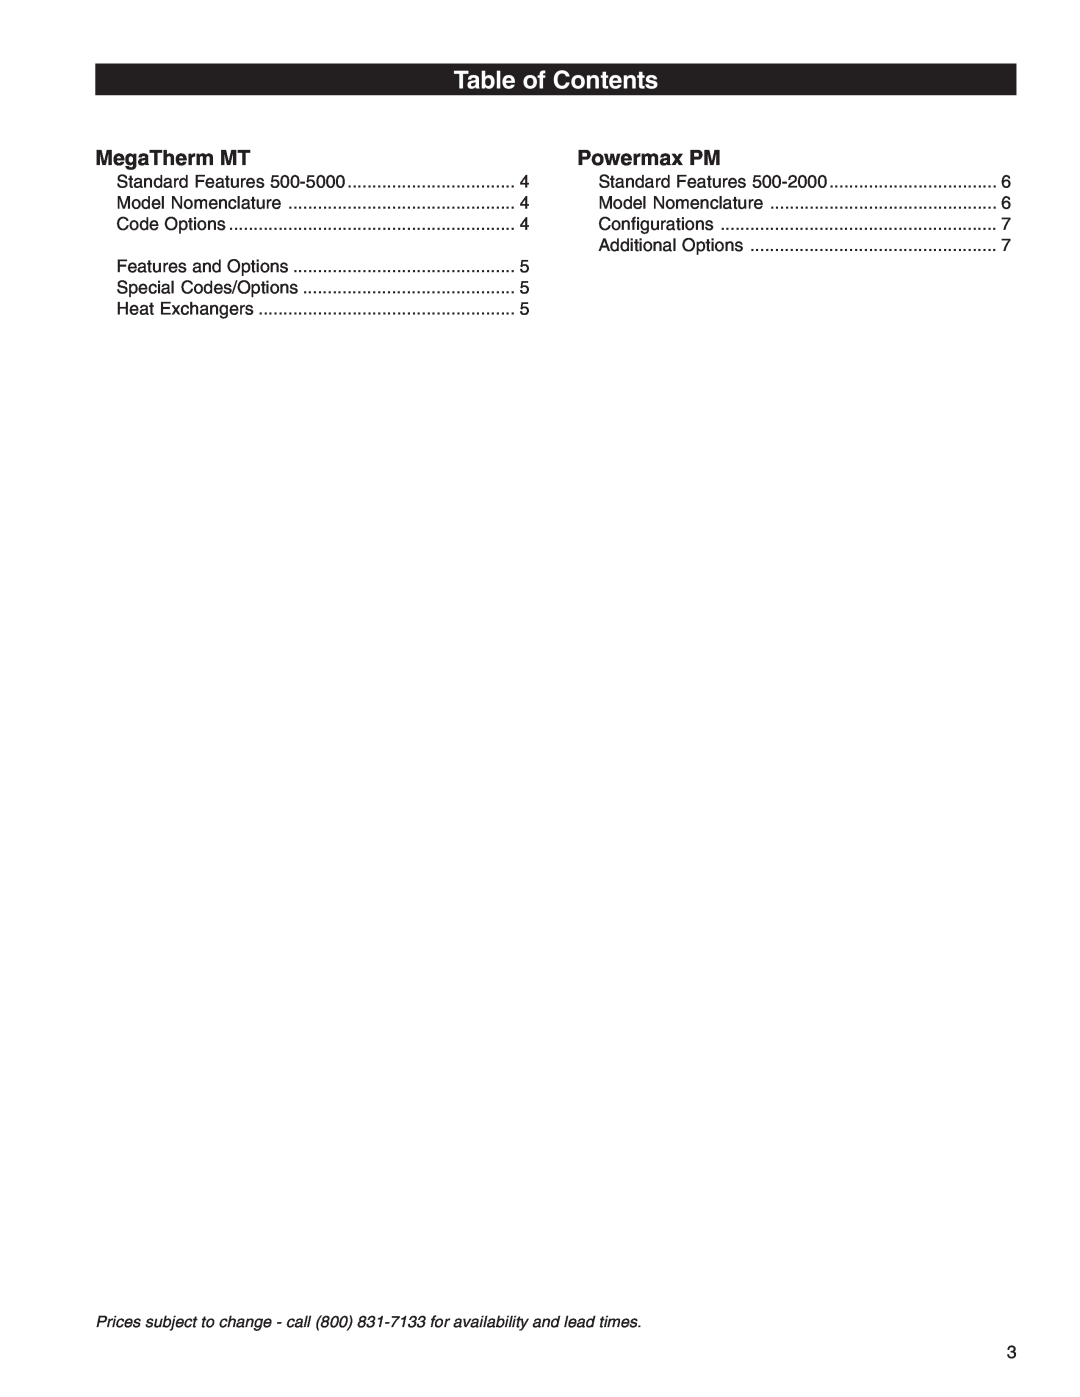 Pentair 472645 manual Table of Contents, MegaTherm MT, Powermax PM 